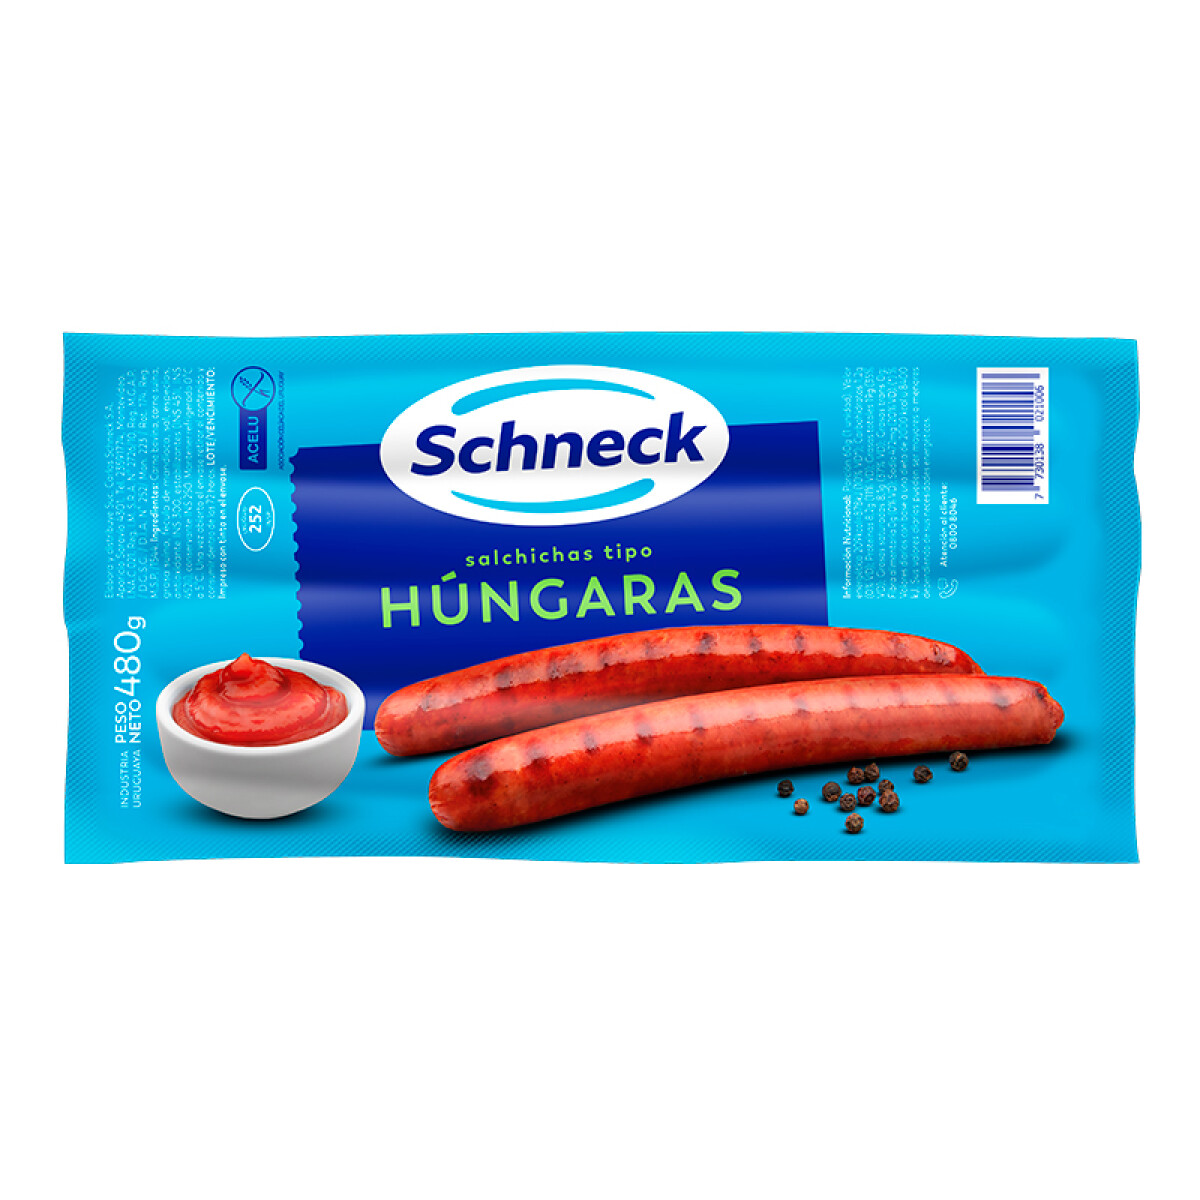 Húngaras Schneck x 8 unidades 